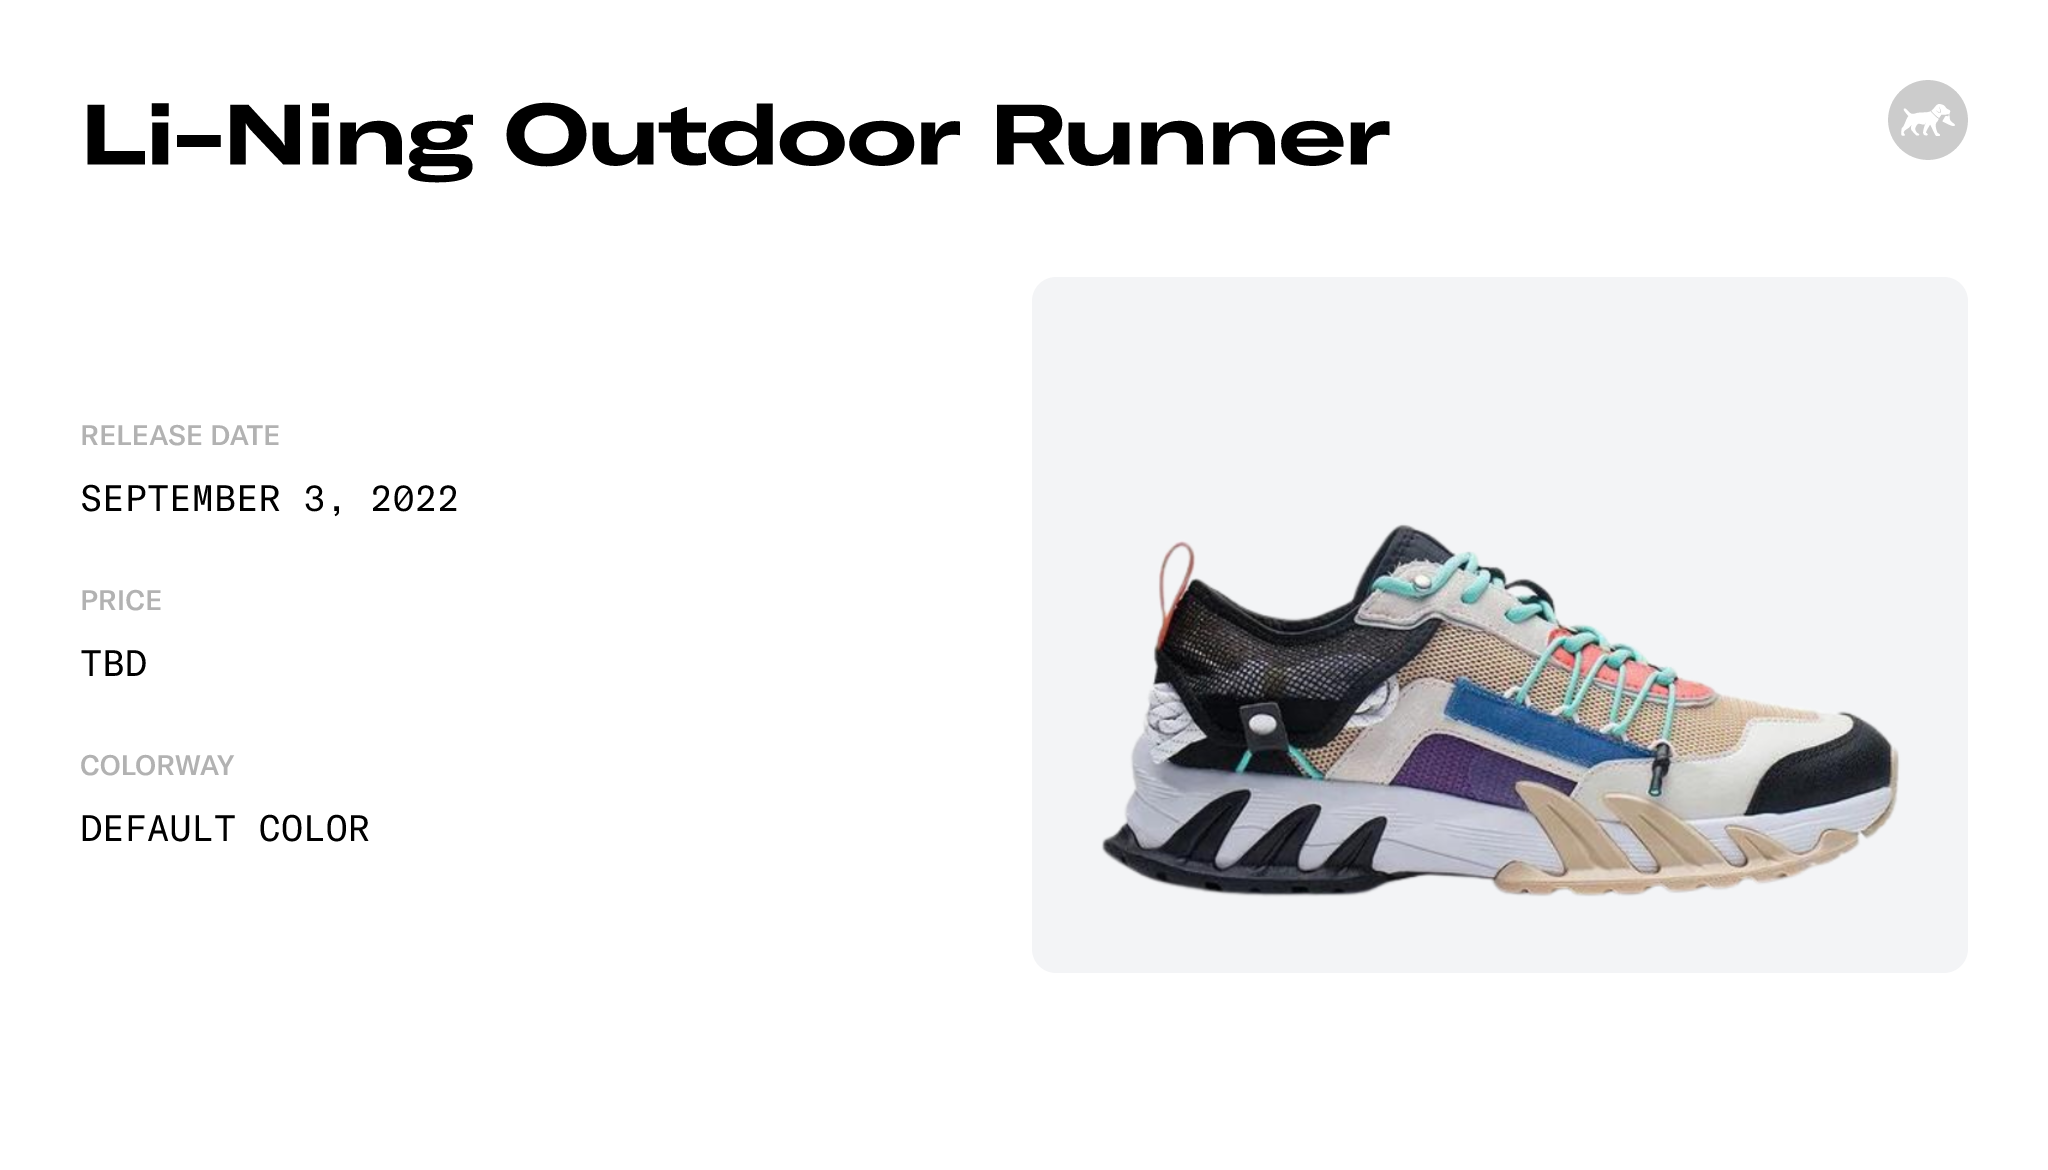 Li-Ning Outdoor Runner - ARDS001-4 Raffles and Release Date